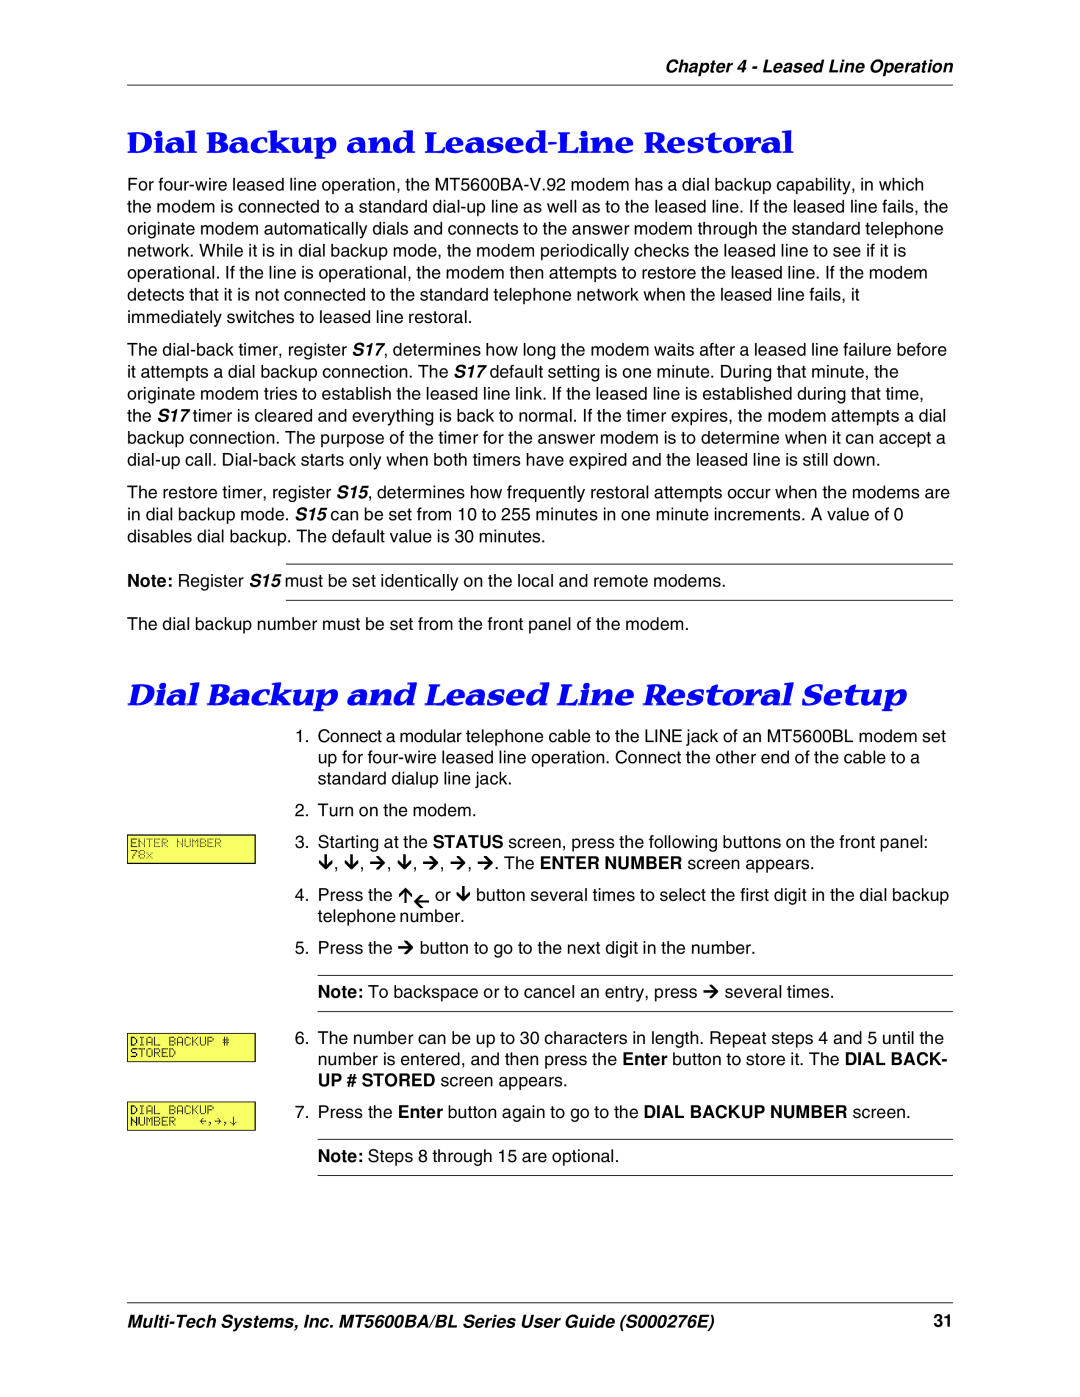 Multitech MT5600BA, MT5600BL manual Dial Backup and Leased-Line Restoral, Dial Backup and Leased Line Restoral Setup 